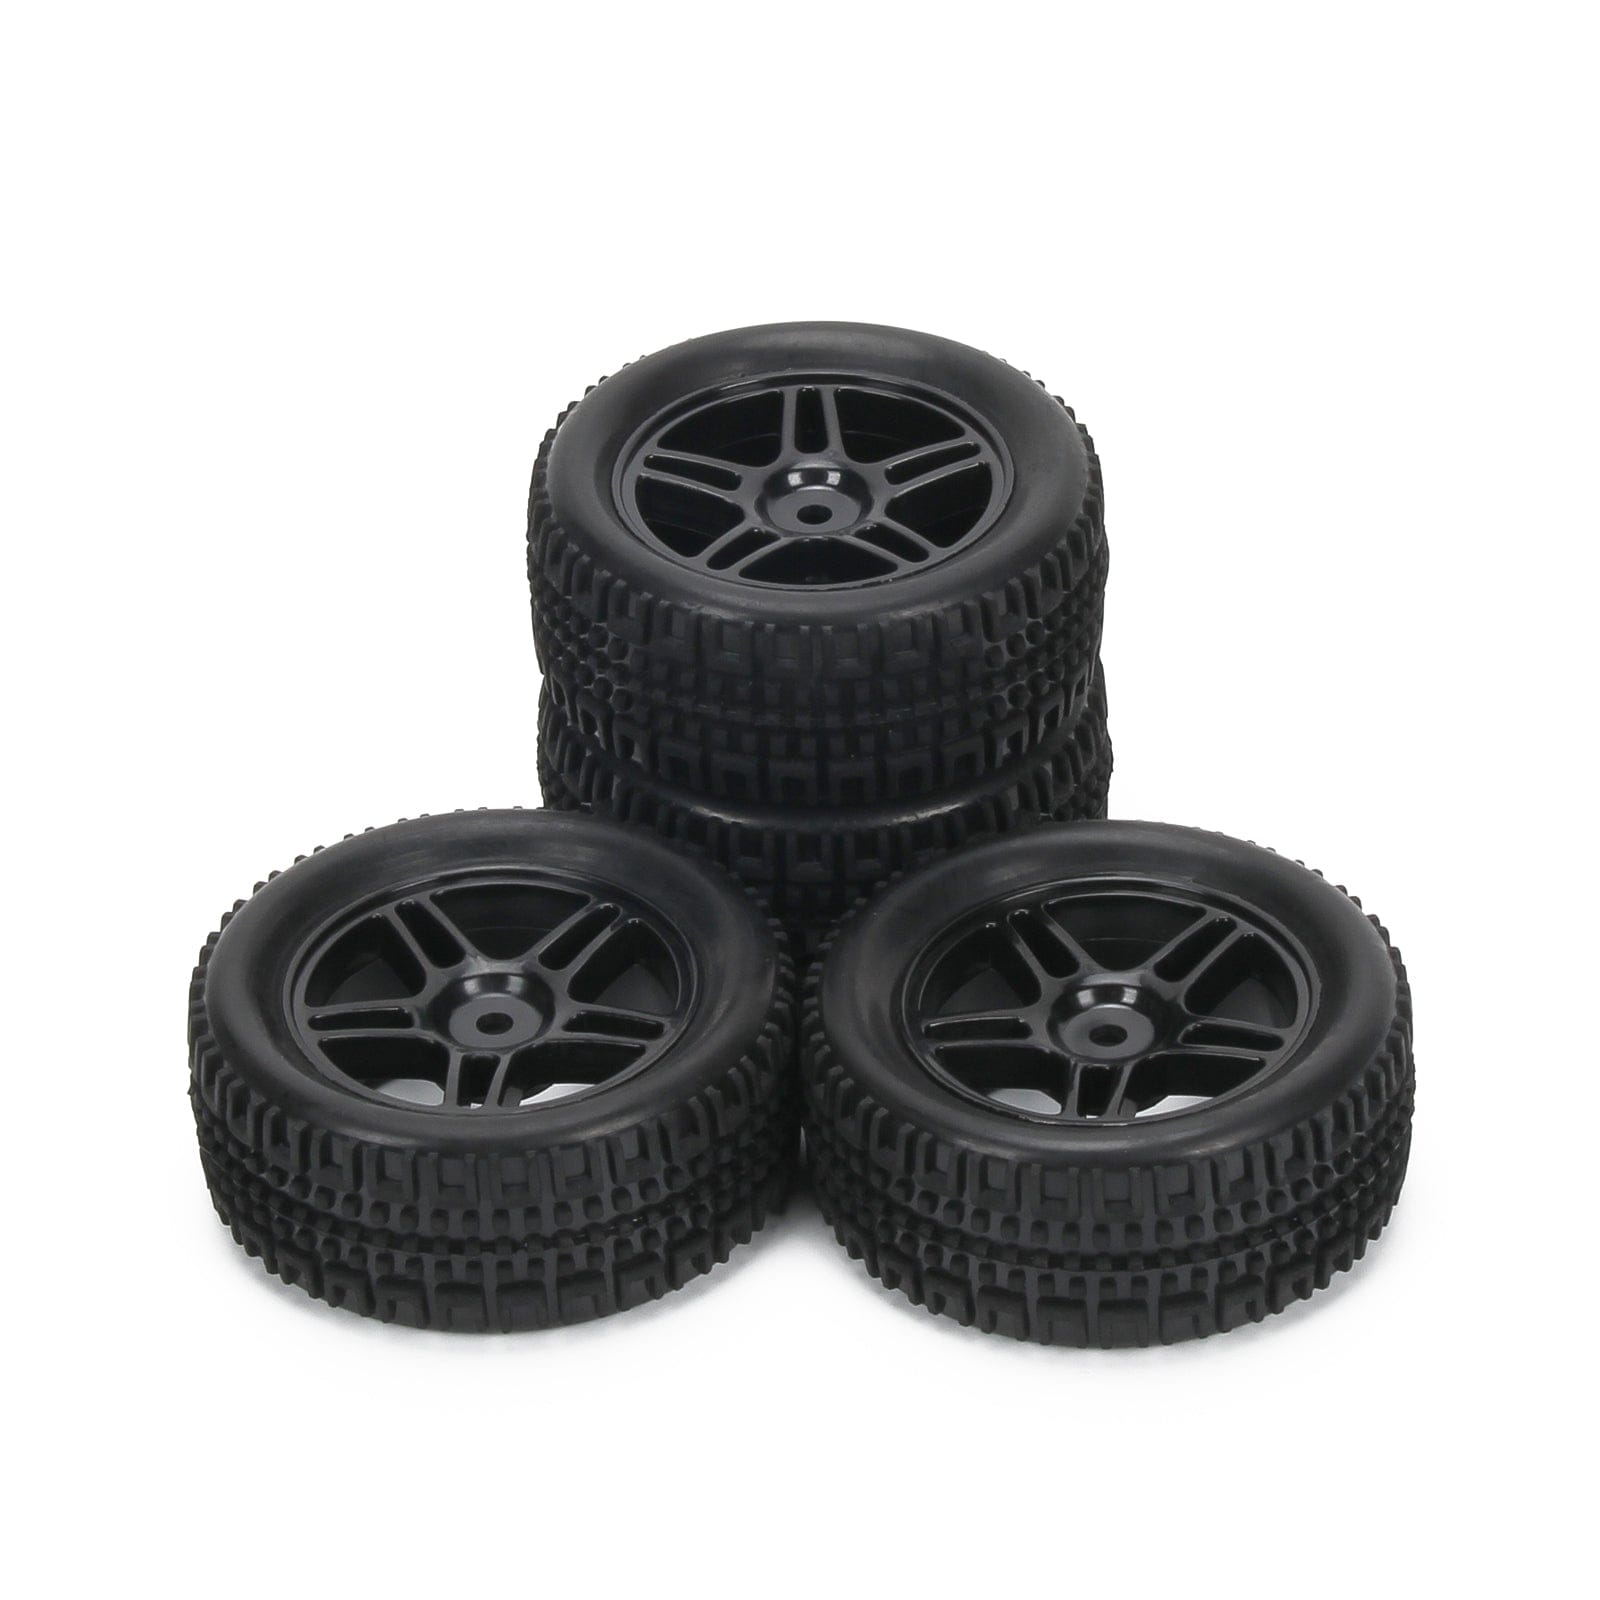 RCAWD Axial Yeti Jr RCAWD Axial 1/18 Yeti Jr Upgrades Wheel Rim & Rubber Tire AXI31594-1 AXI31594-3